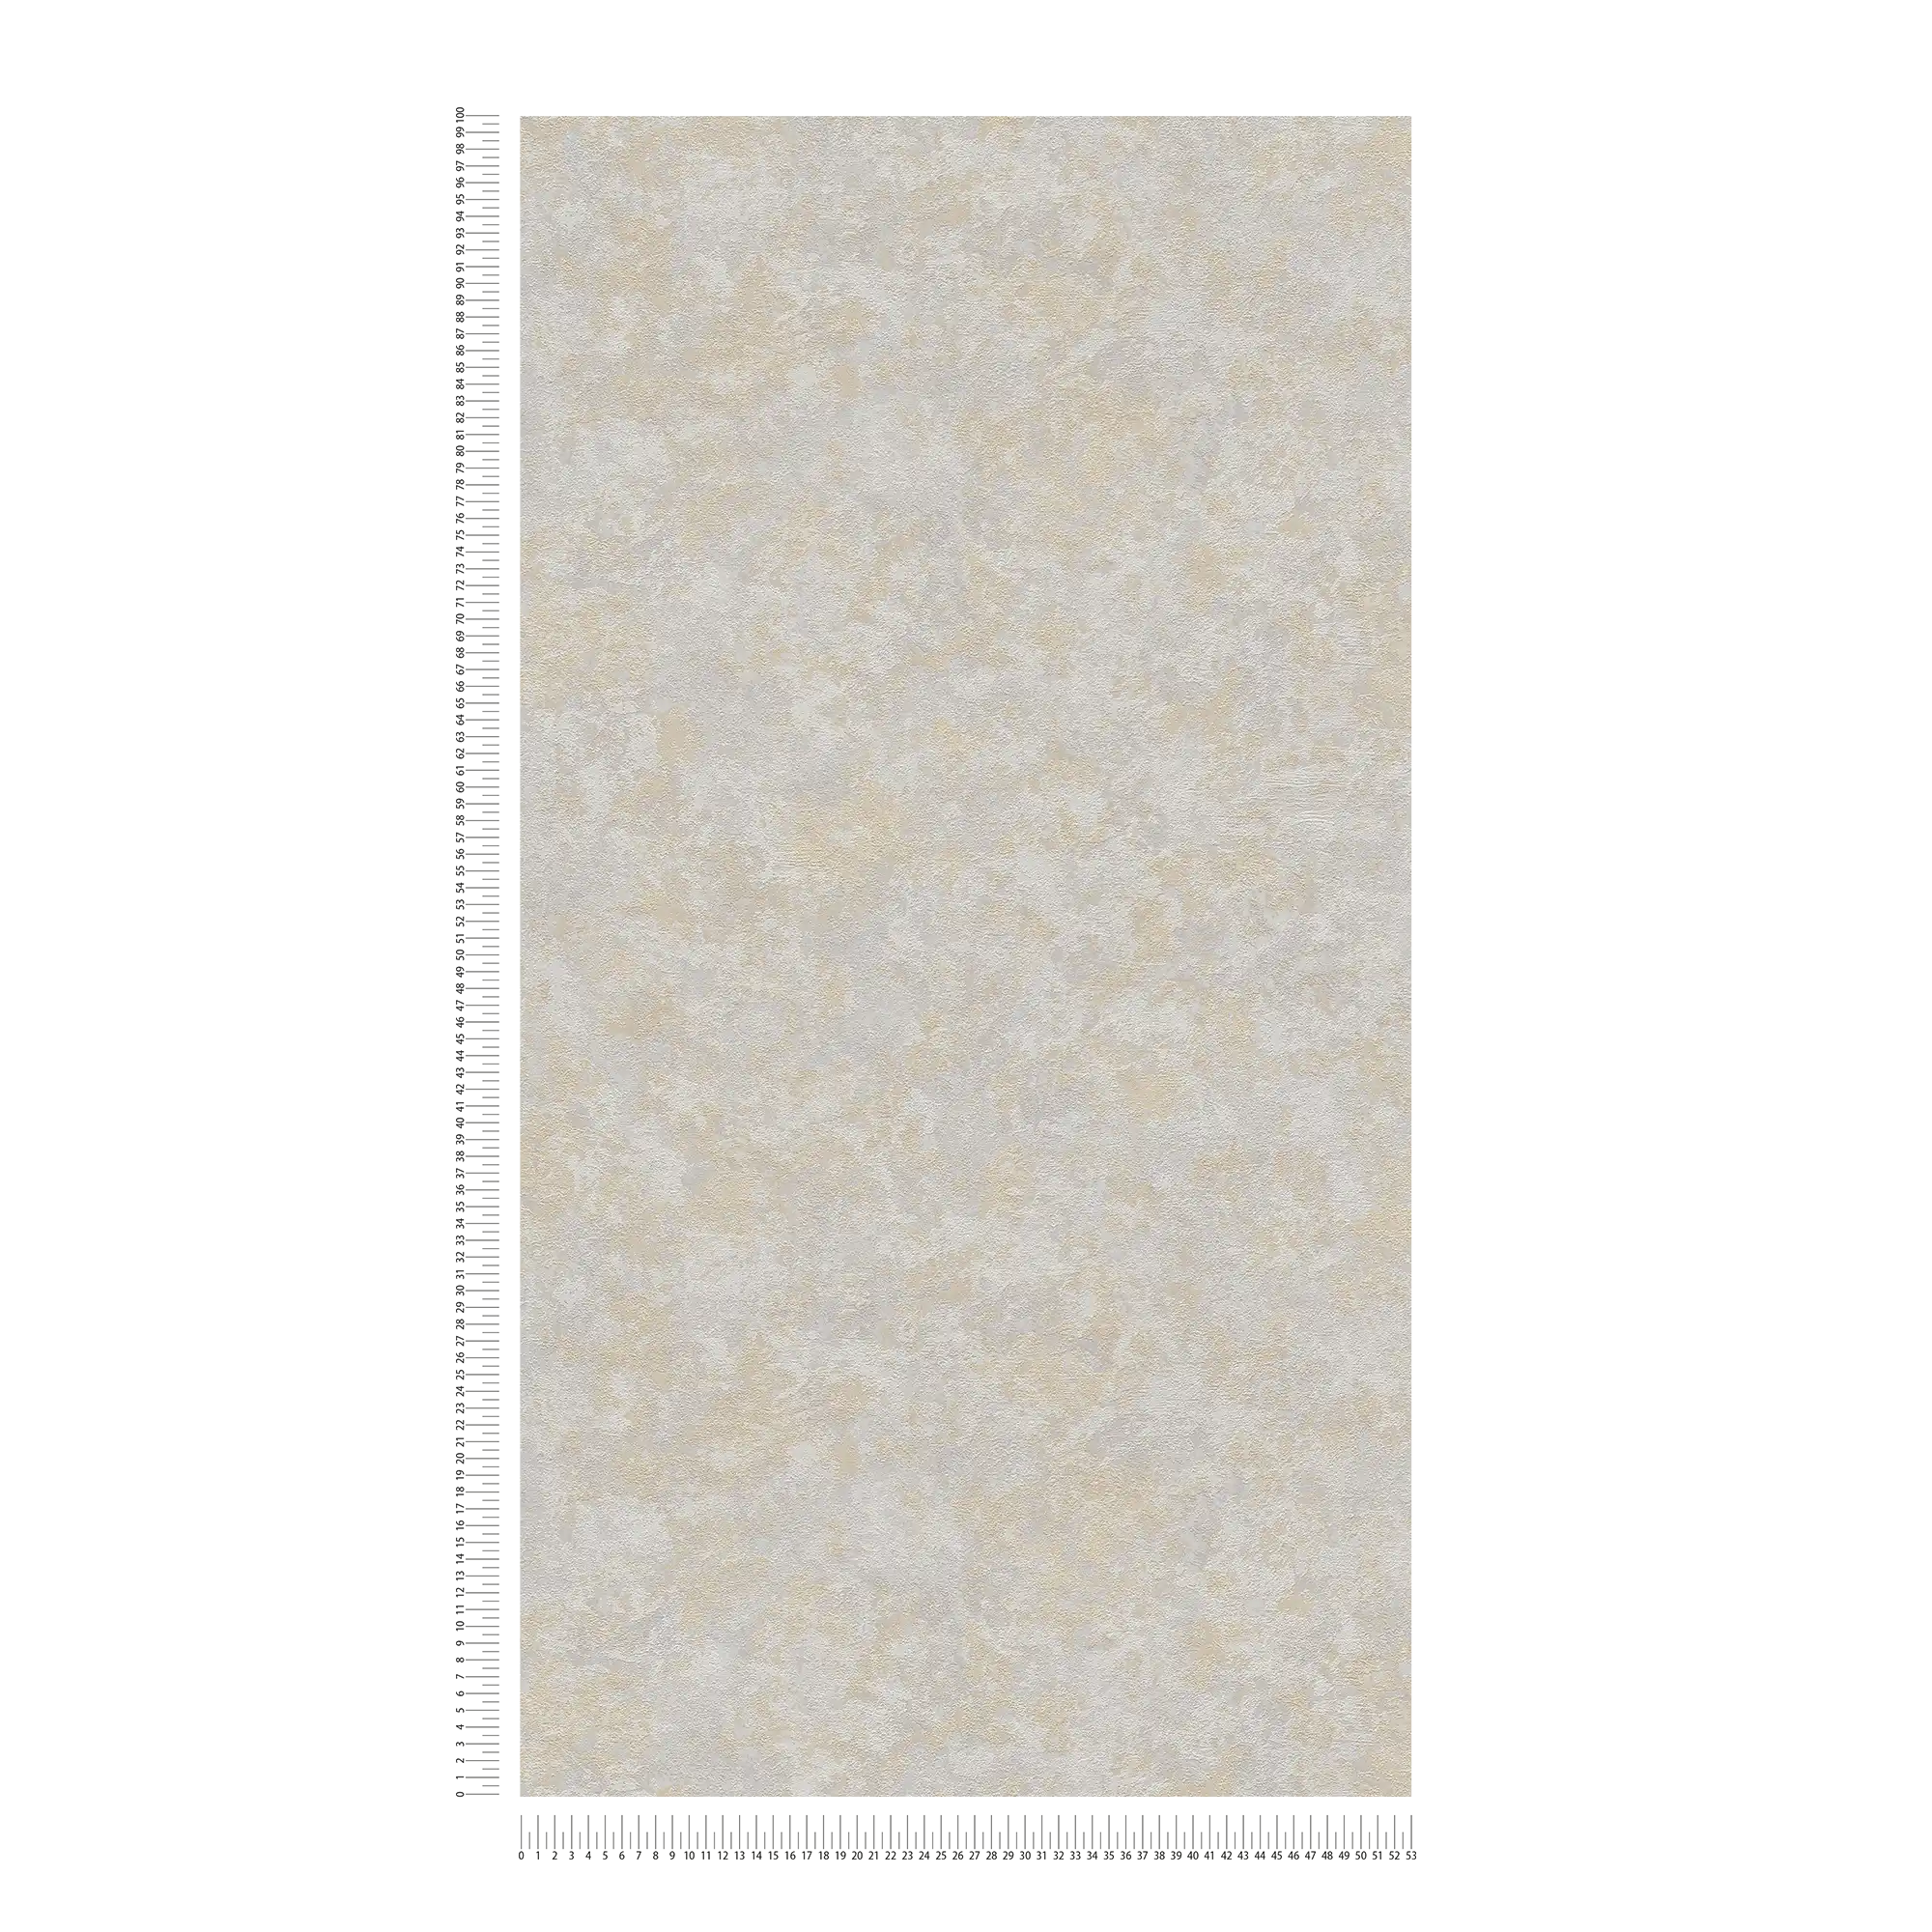             Plain wallpaper mottled with textured pattern - beige, grey
        